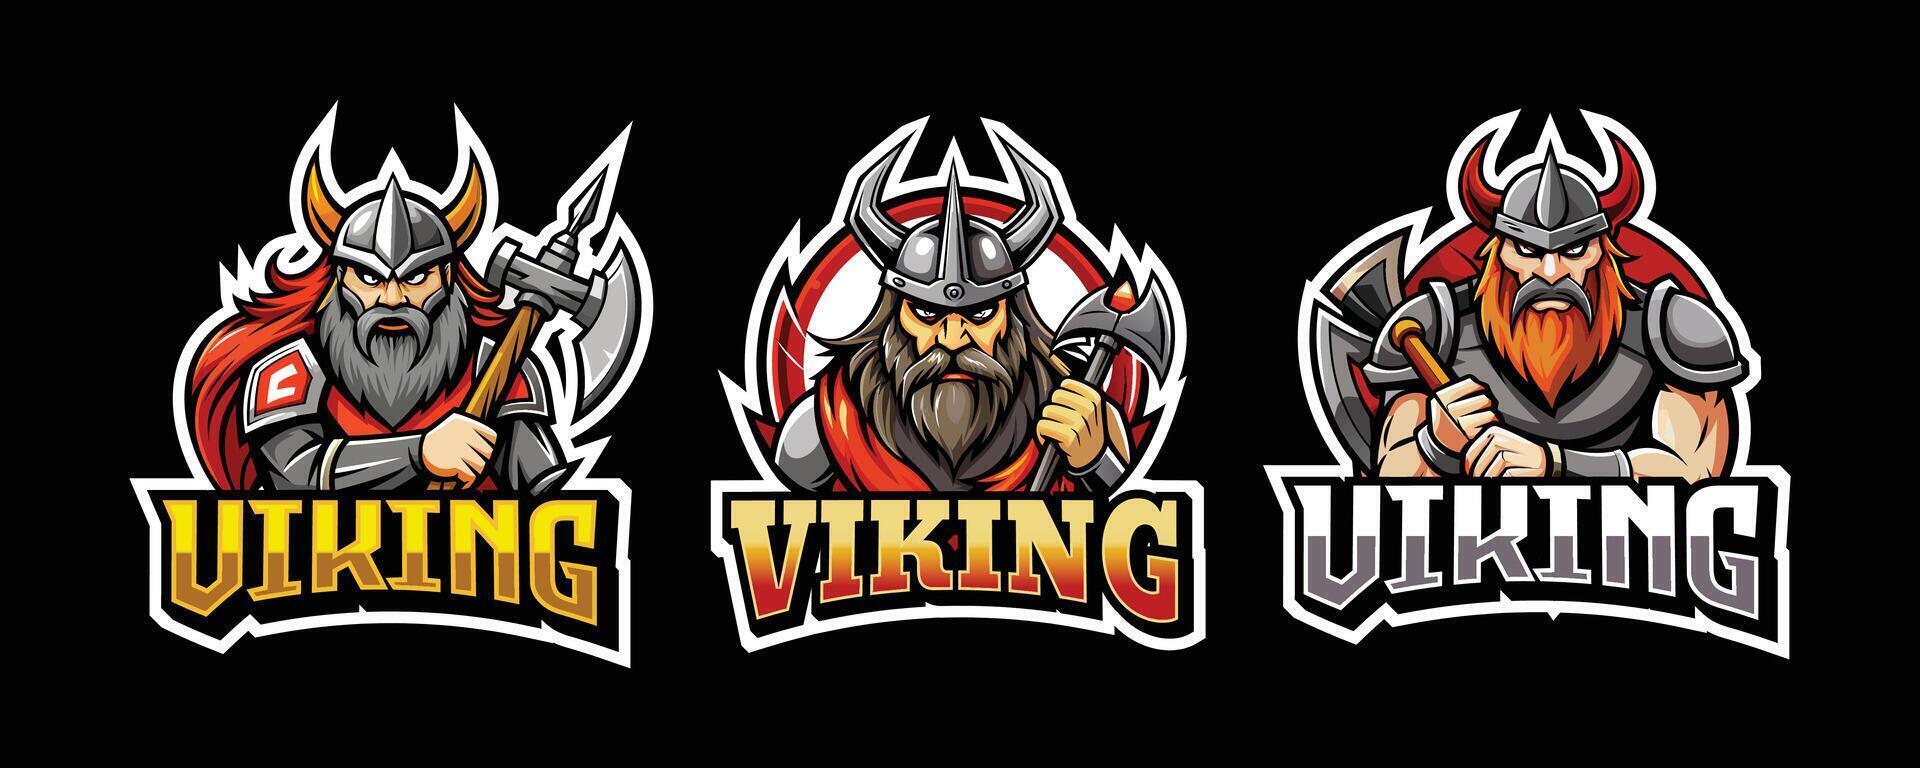 vikingo deporte juego de azar logo. conjunto de vikingo mascota diseño vector